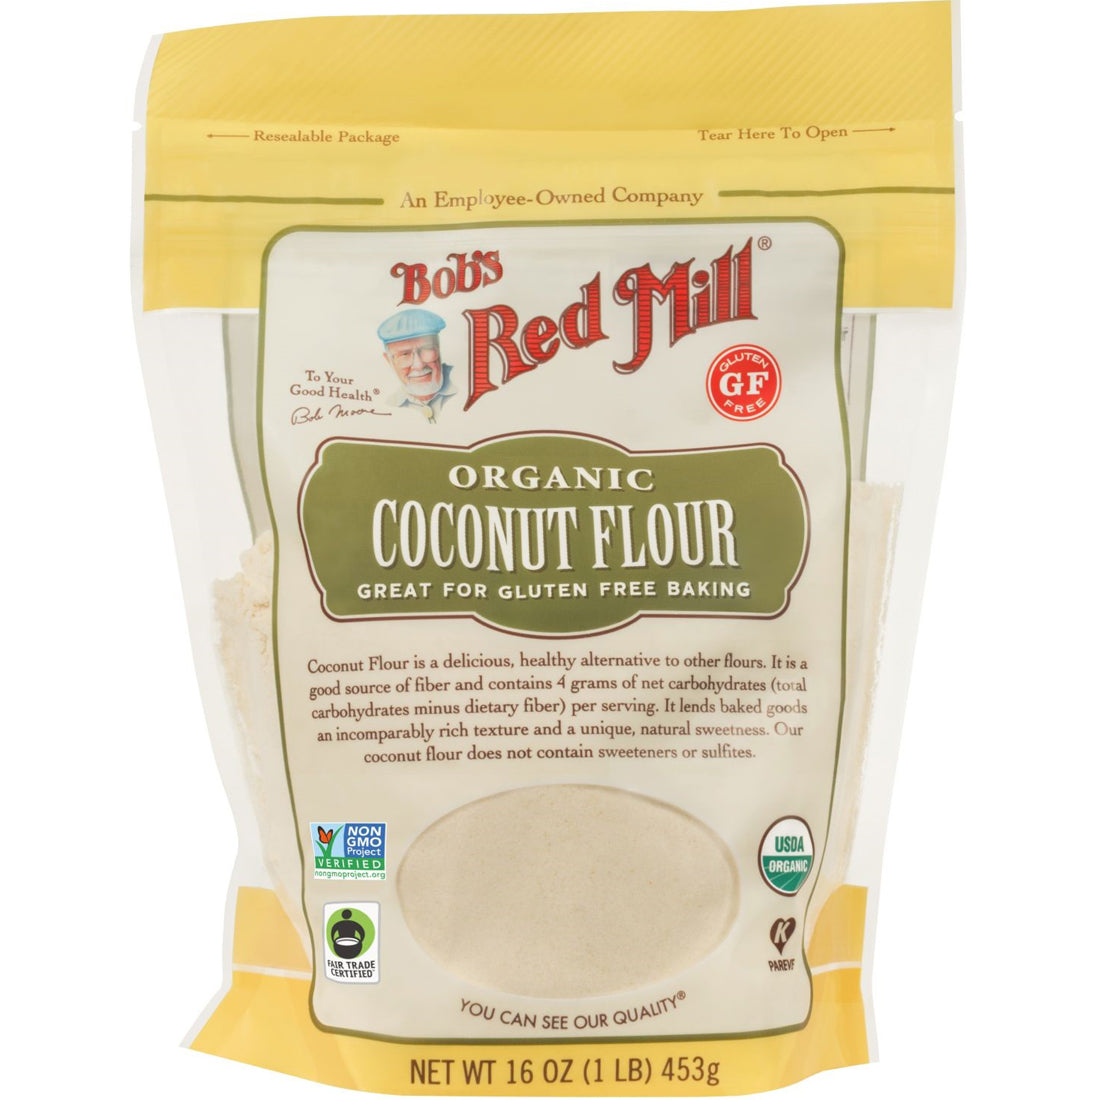 Bob's Red Mill Organic Coconut Flour, 453g